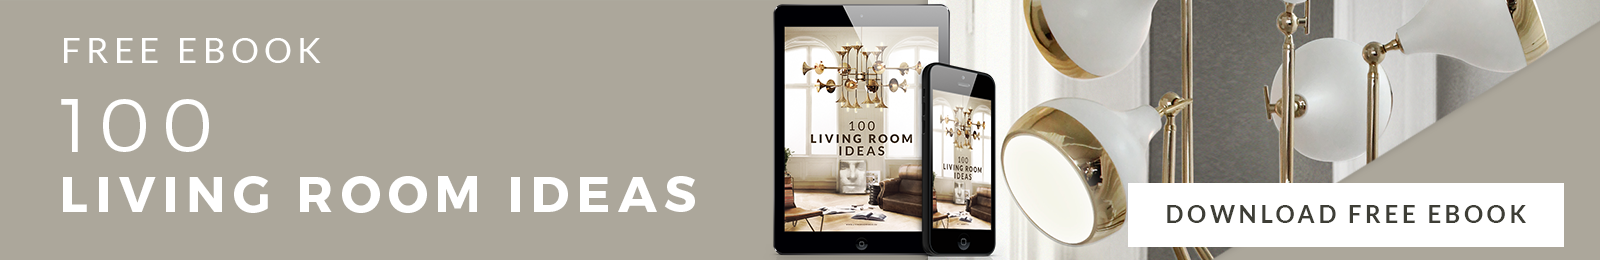 home design tips 10 Home Design Tips From The Hamptons 100 living room ideas blog living room ideas